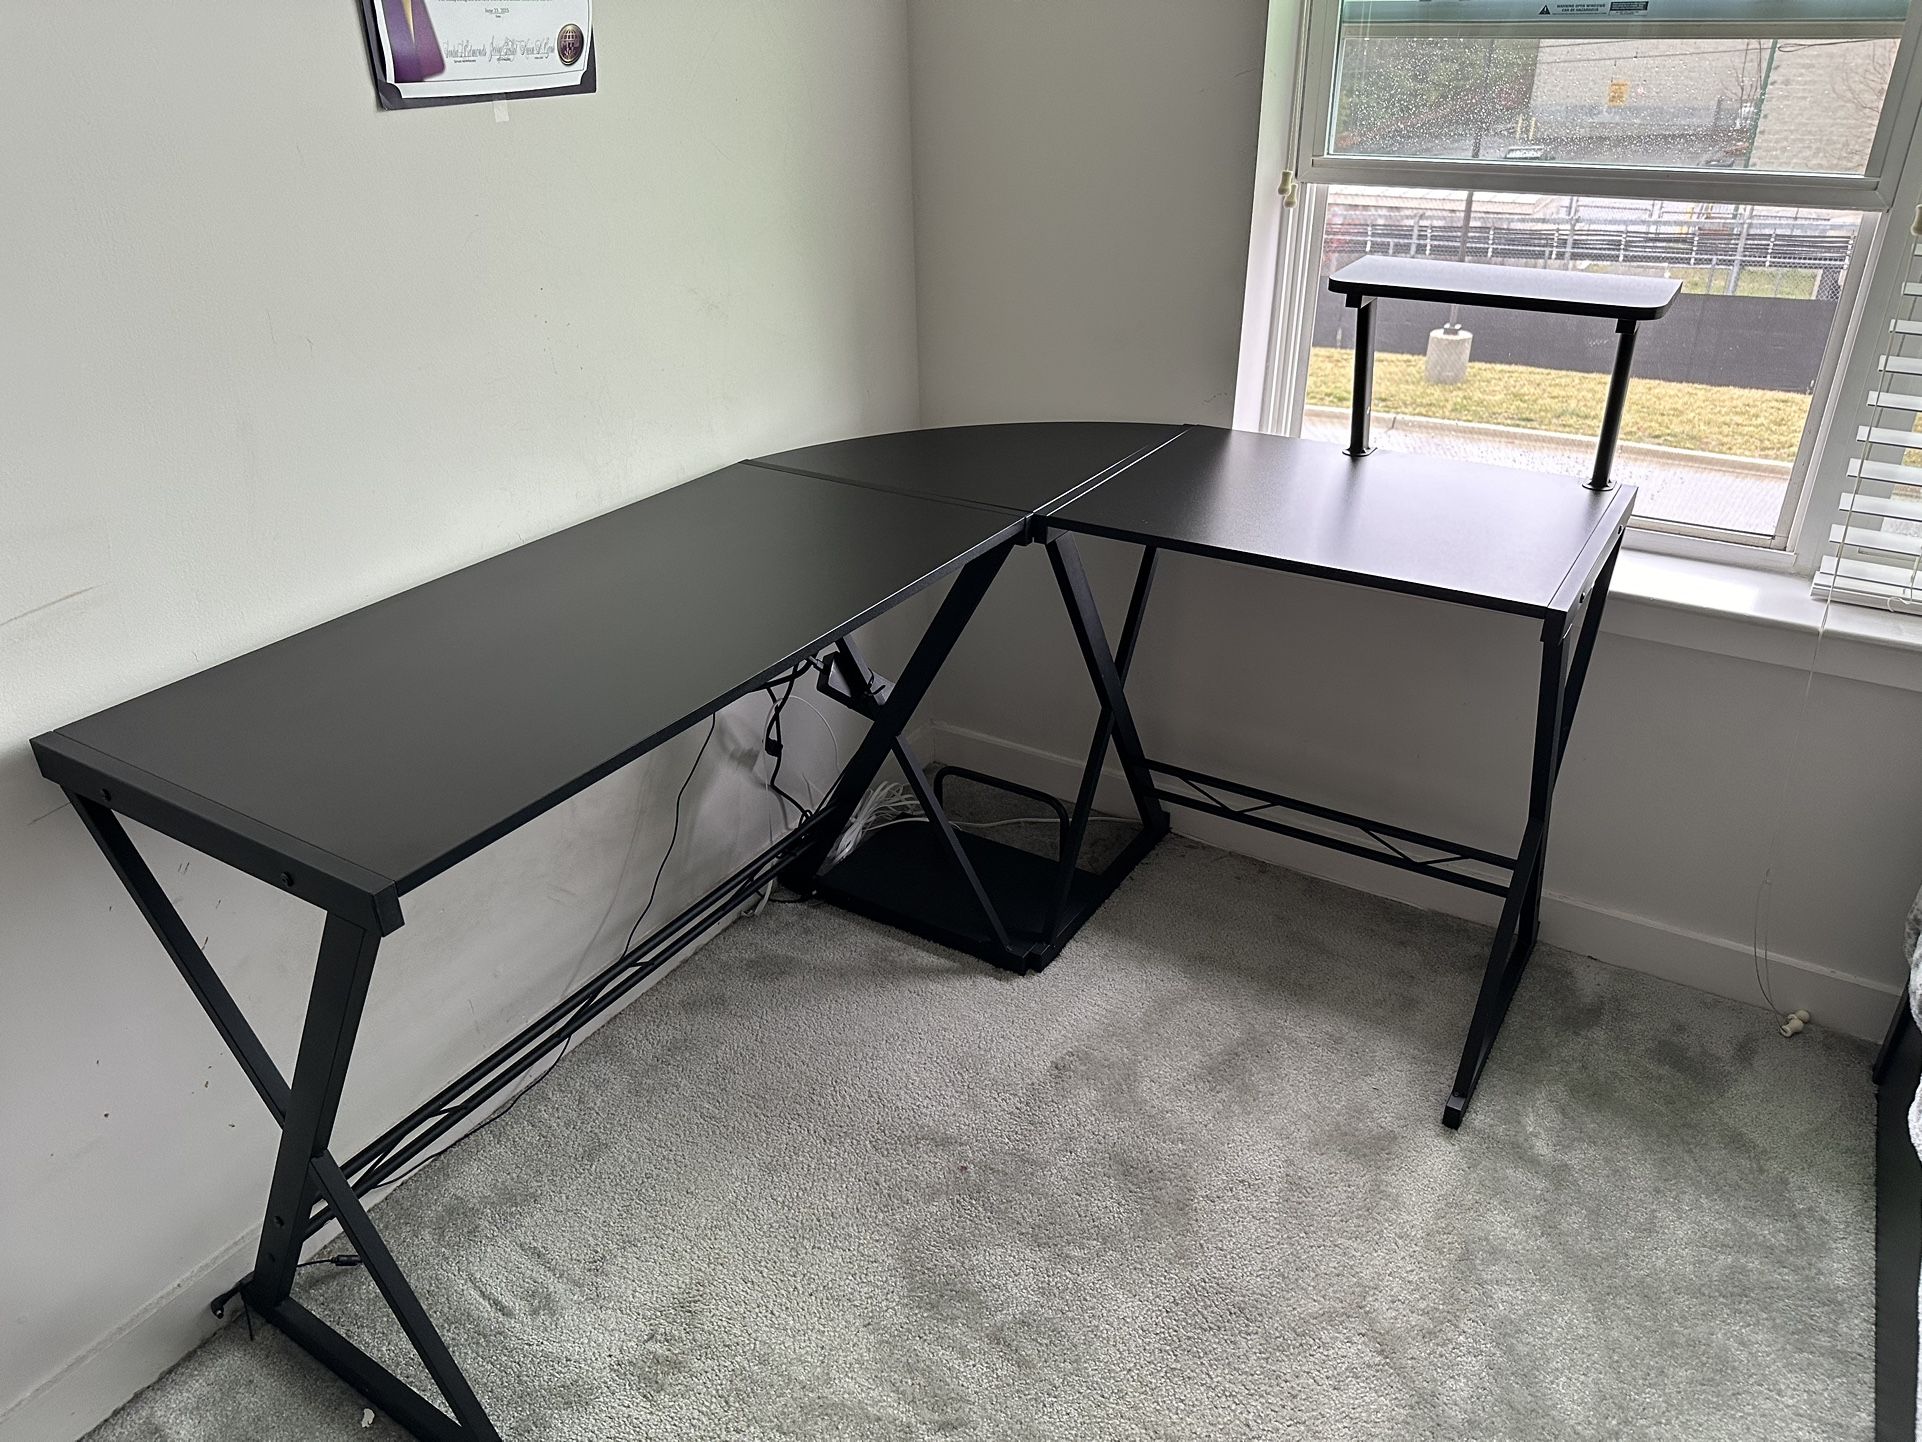 64in By 50in L Shaped Corner Desk - Readjustable